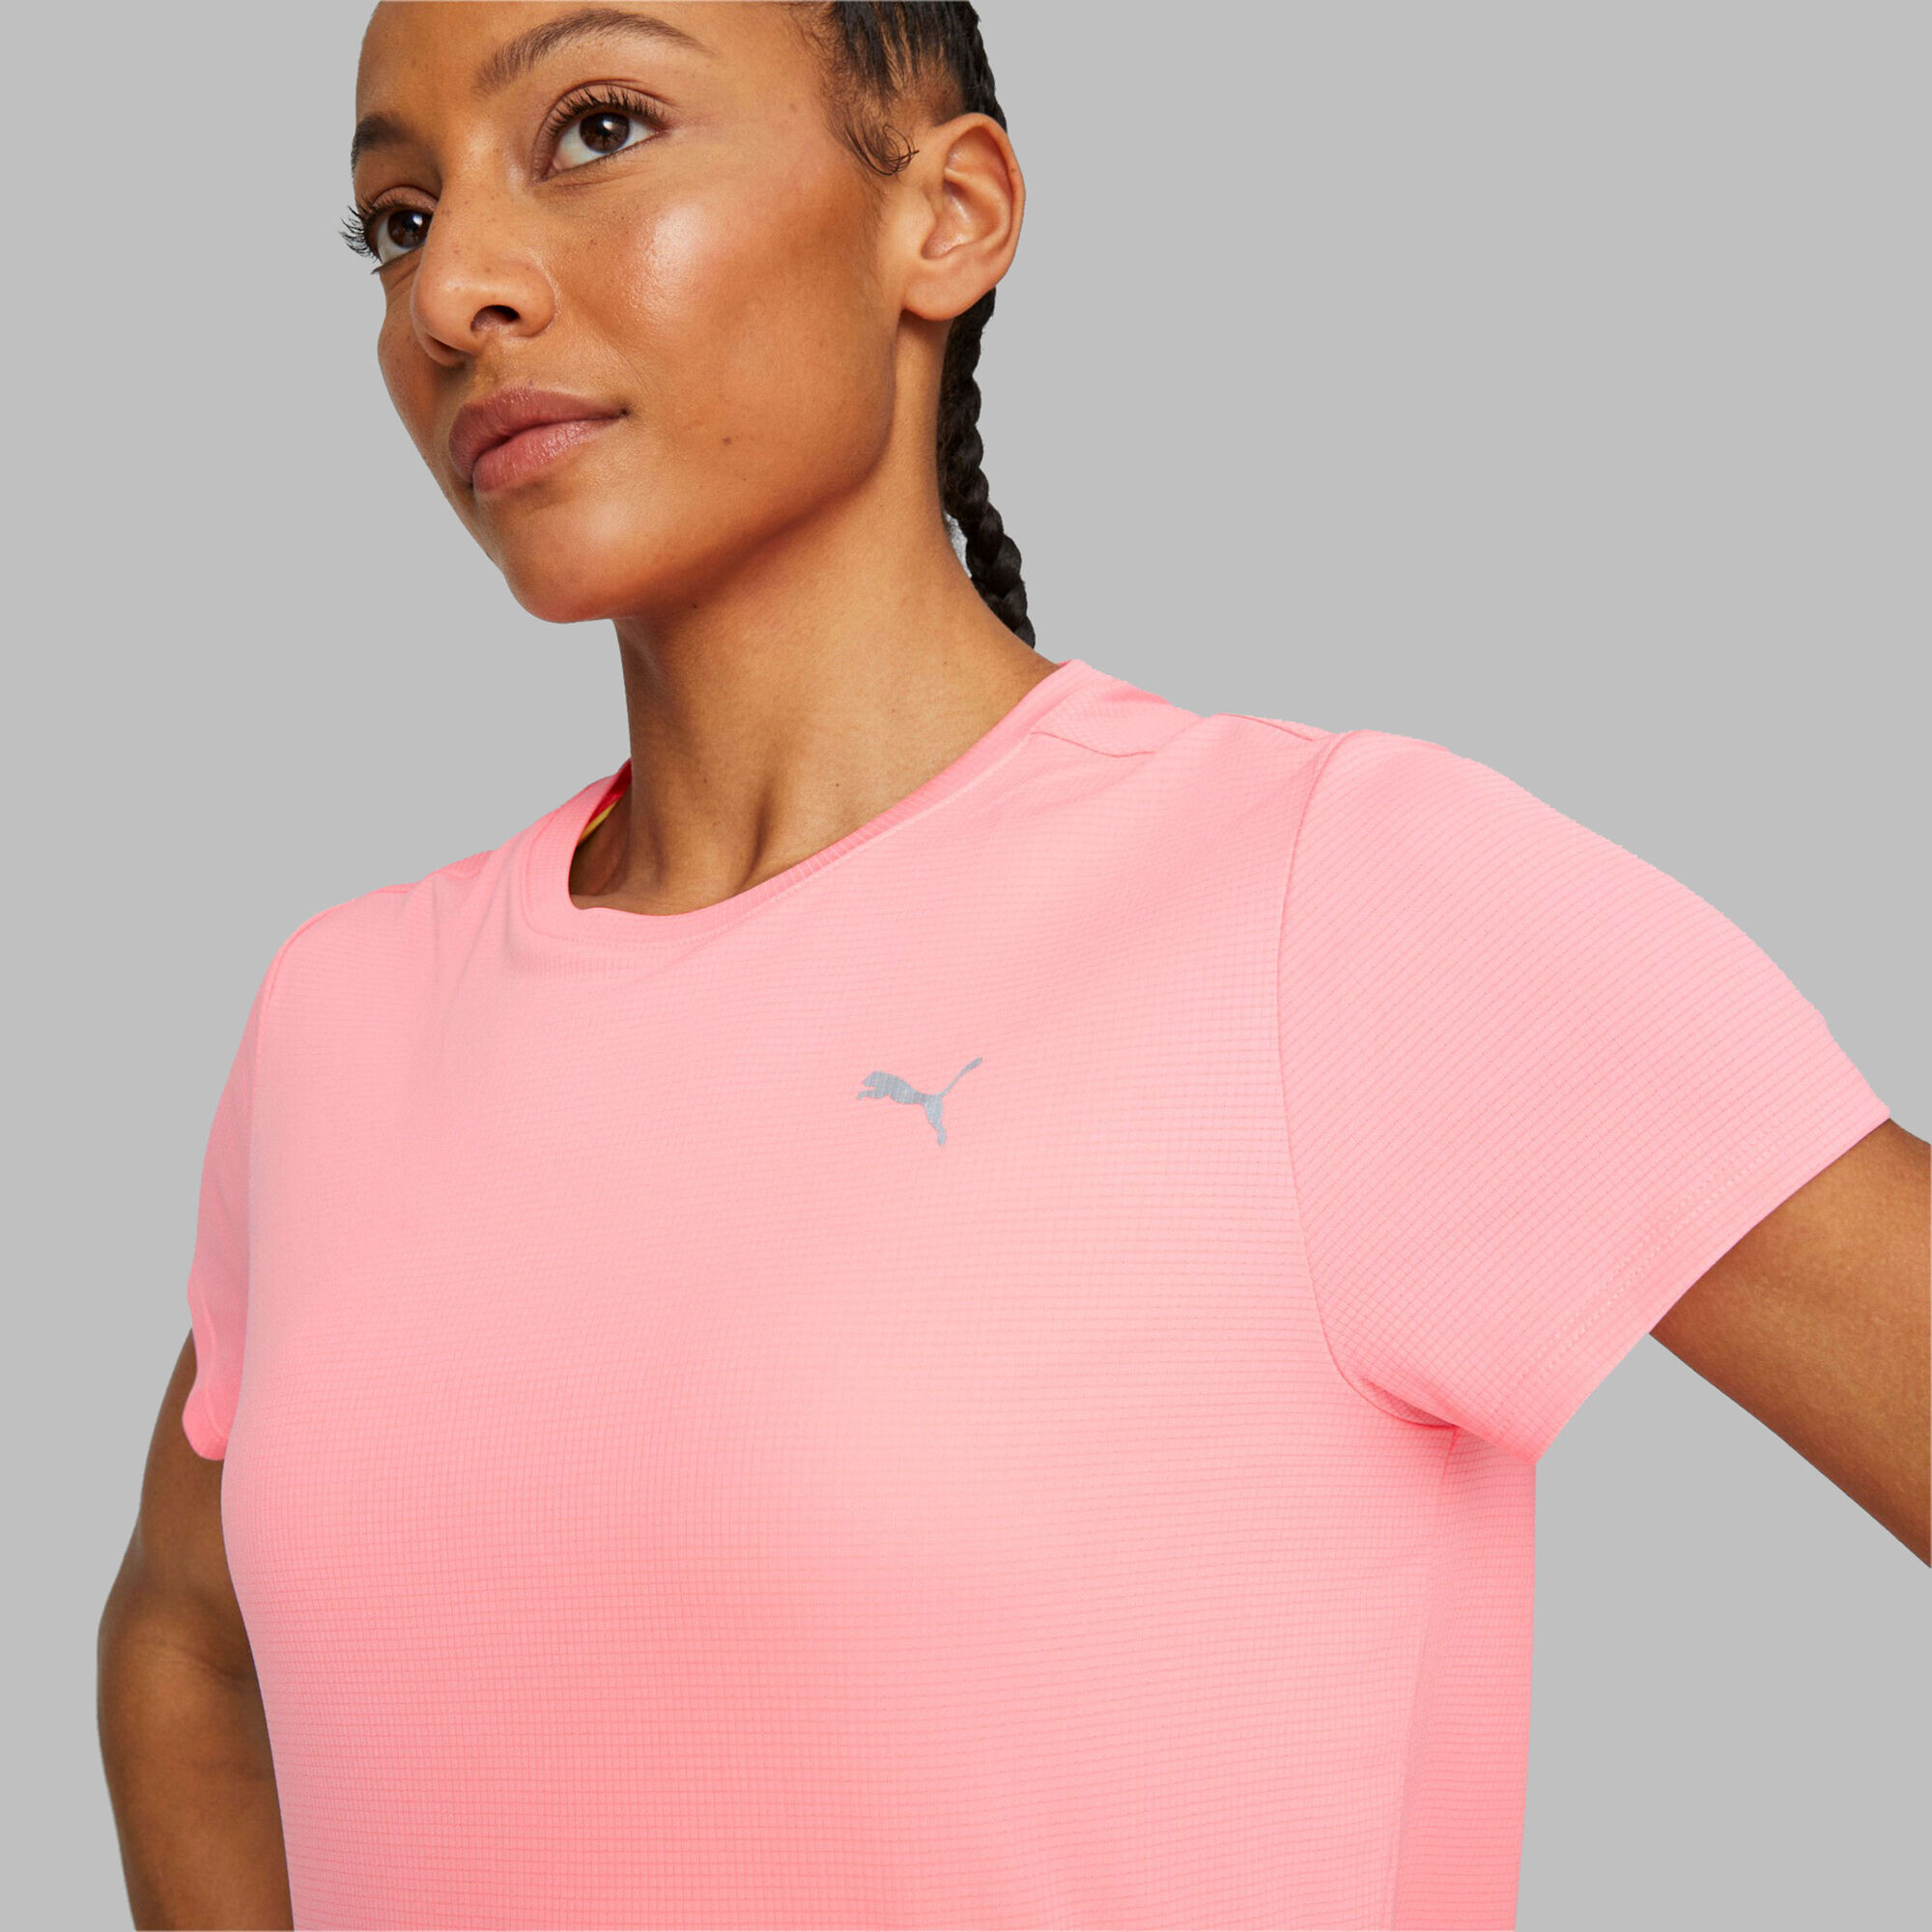 Favorite Run online Running Buy Puma | Pink Running Women Shirts Point COM